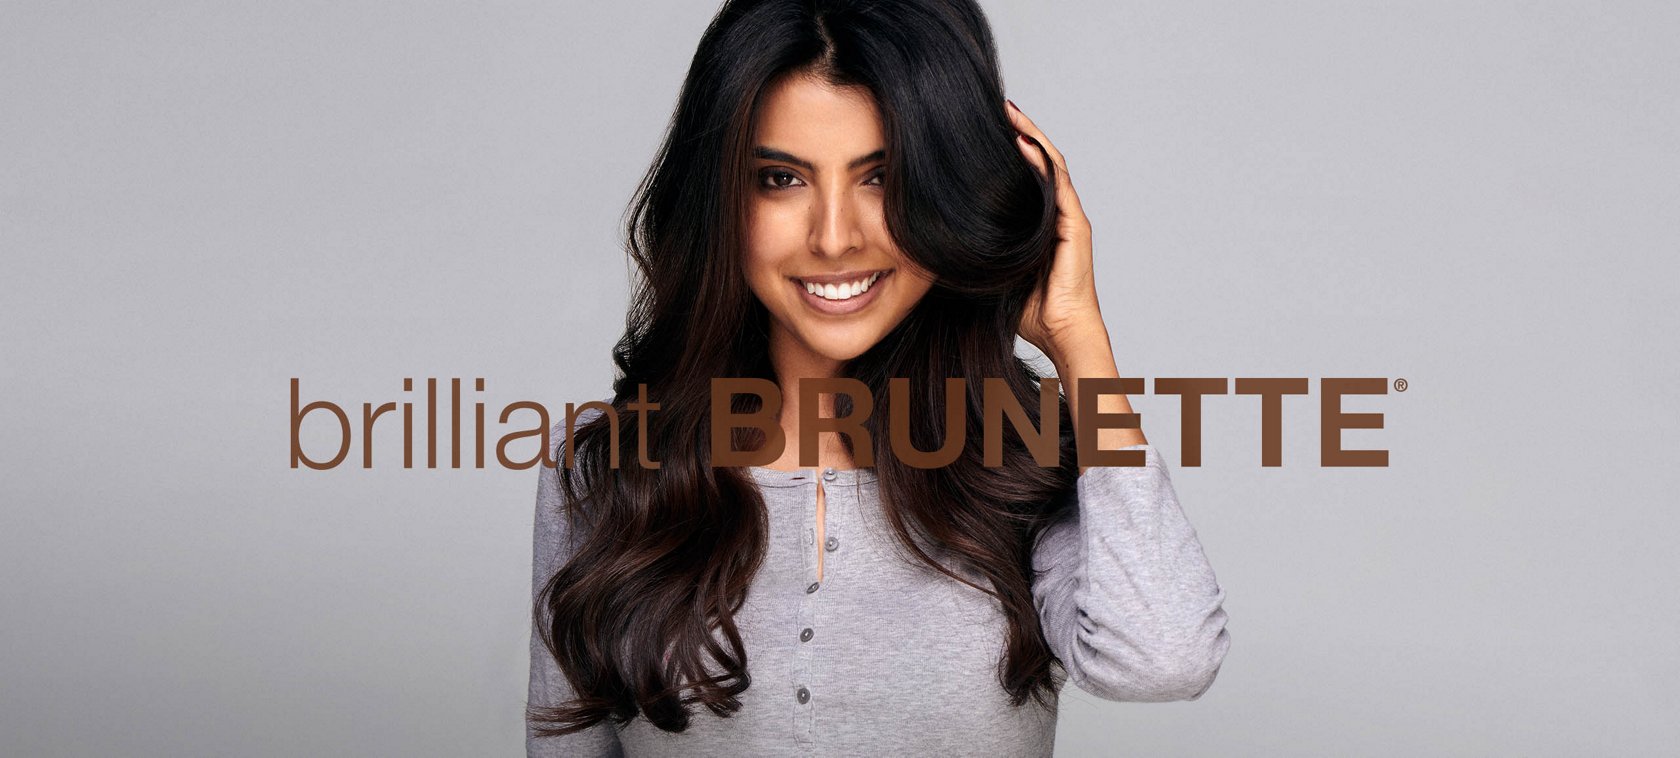 Brilliant Brunette | Products for Brunettes | John Frieda